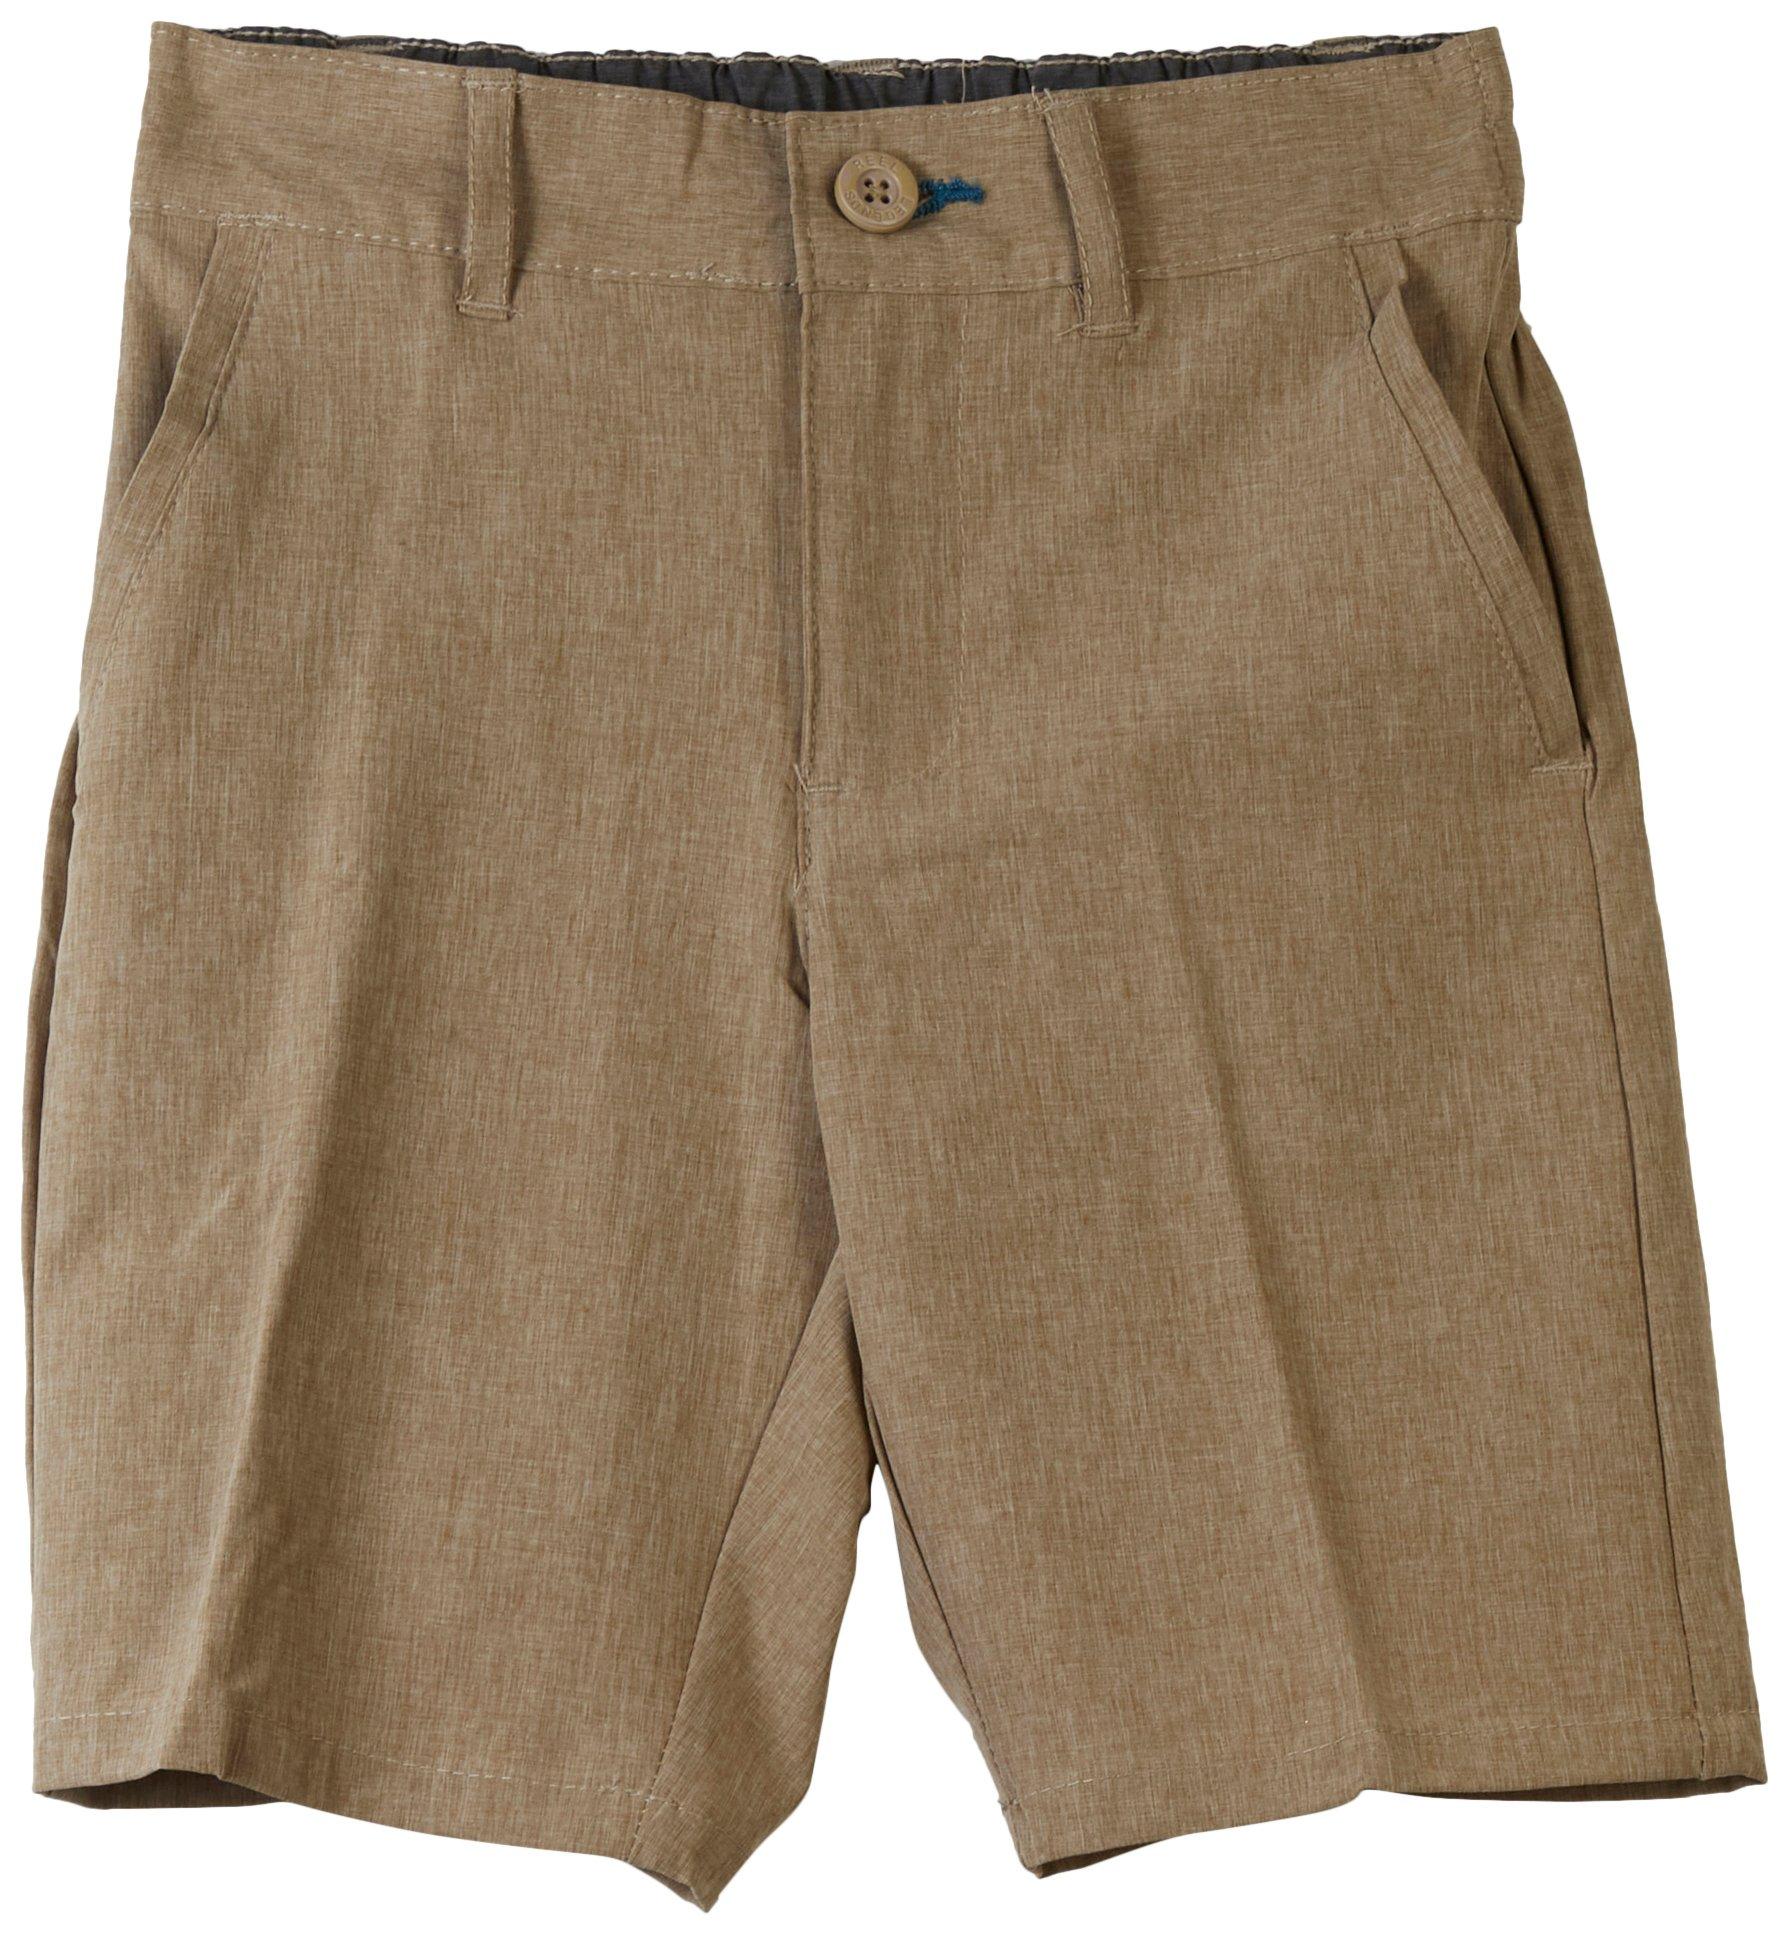 Little Boys 7 in. Solid Hybrid Shorts